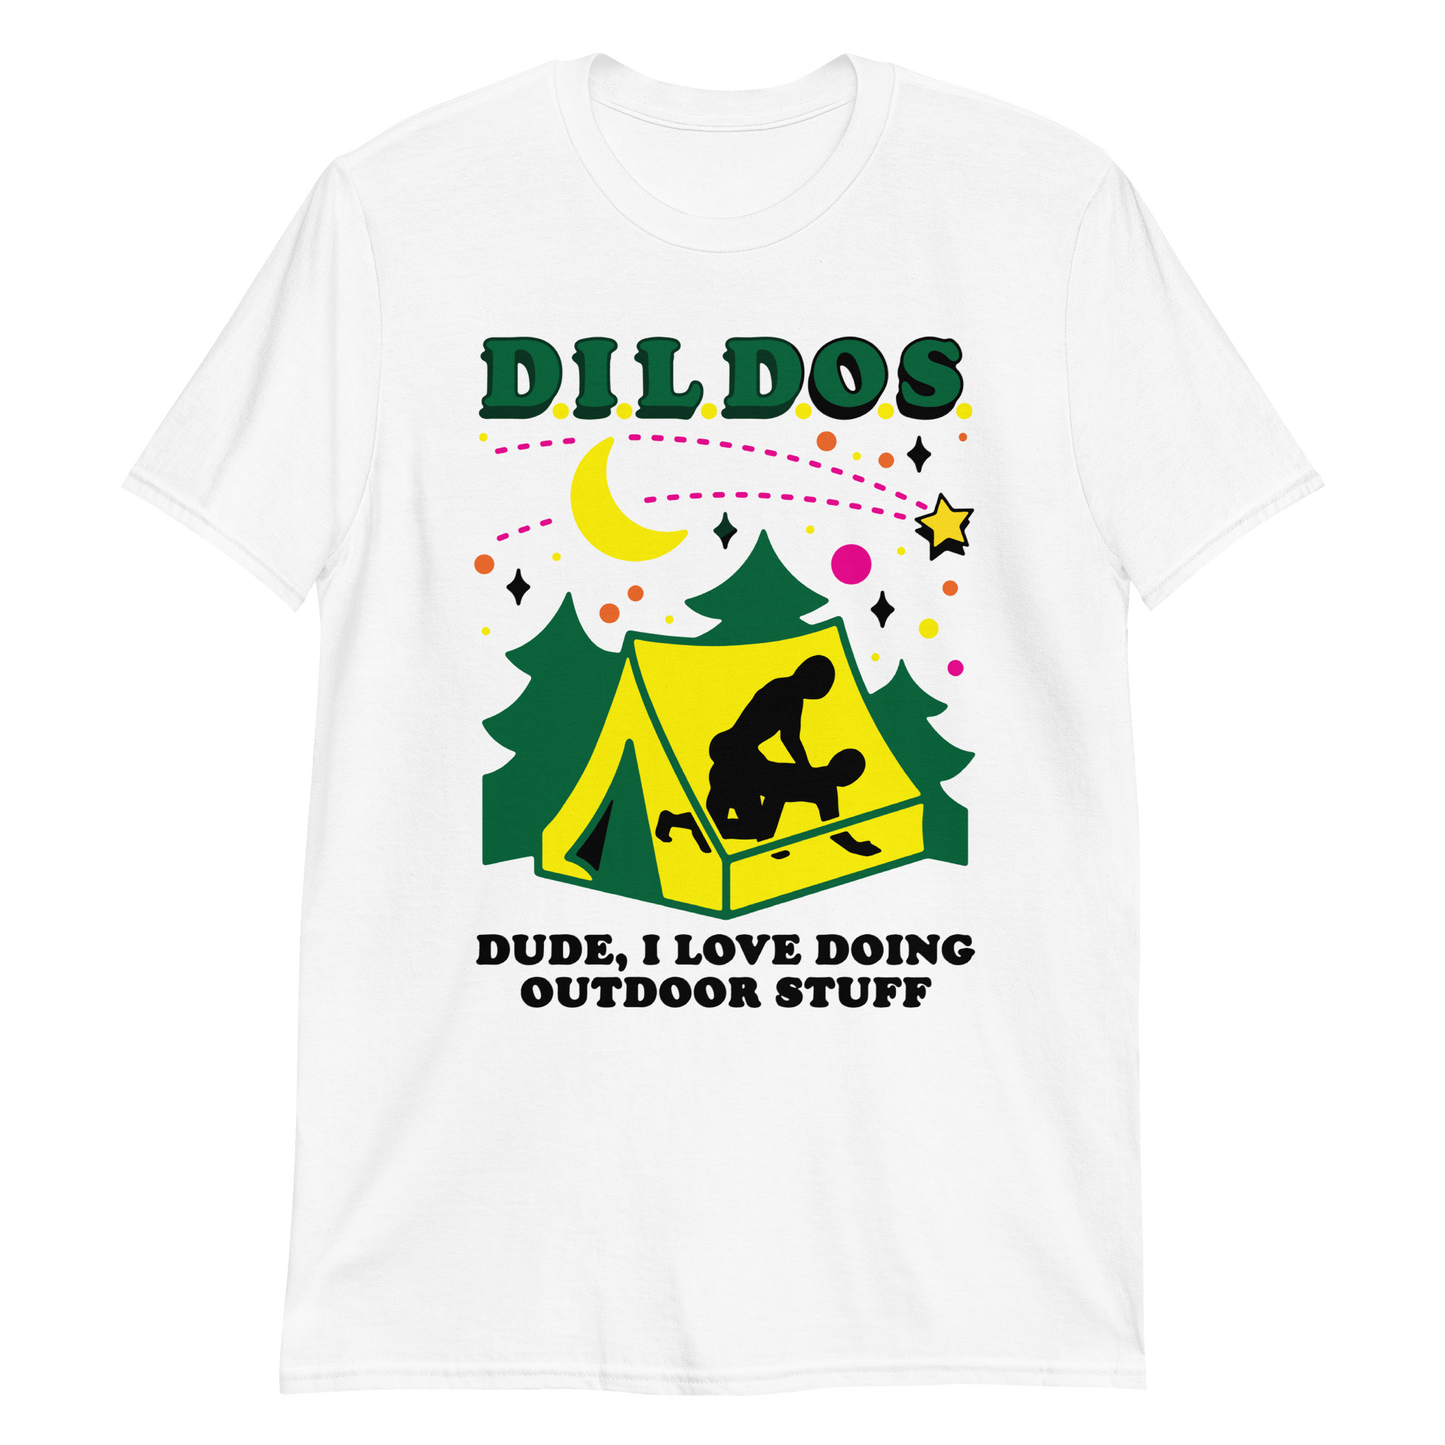 DILDOS (Dude I Love Doing Outdoor Stuff)